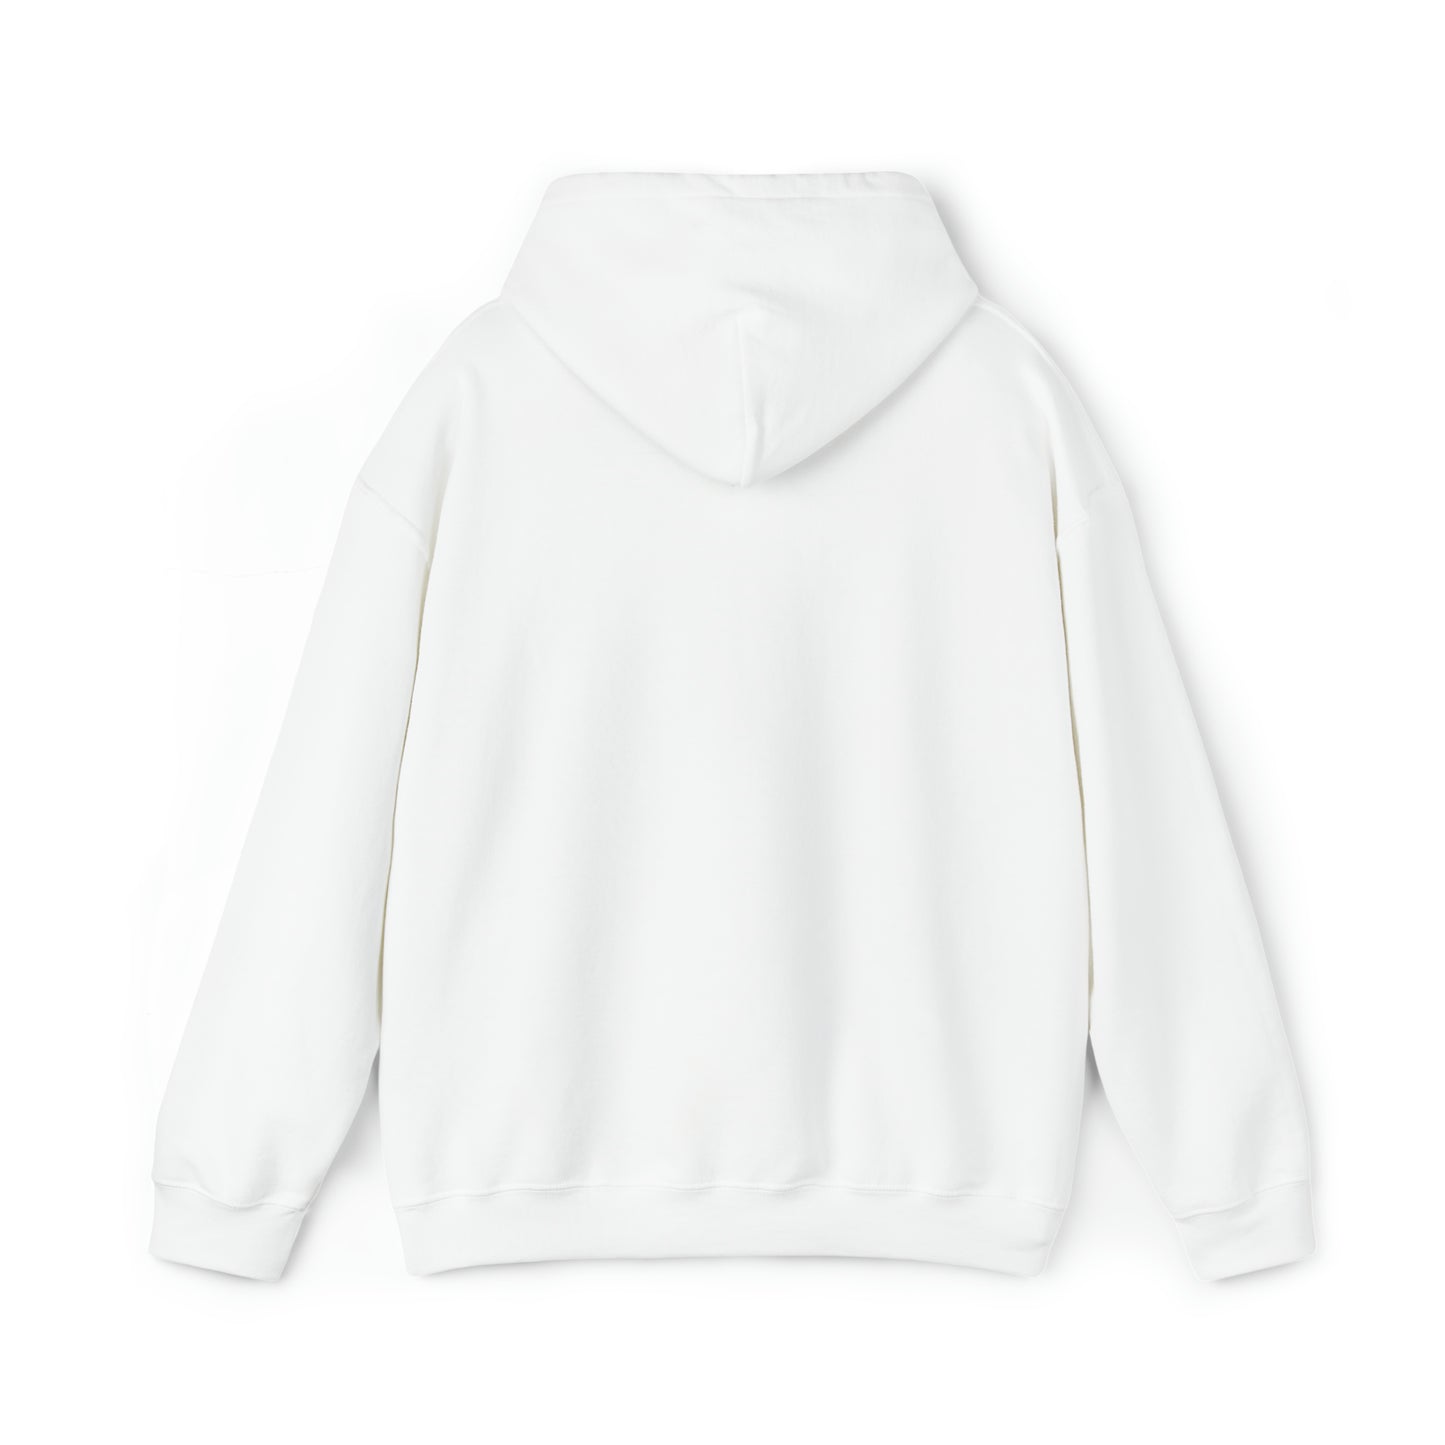 In Paws We Trust Unisex Heavy Blend™ Hooded Sweatshirt